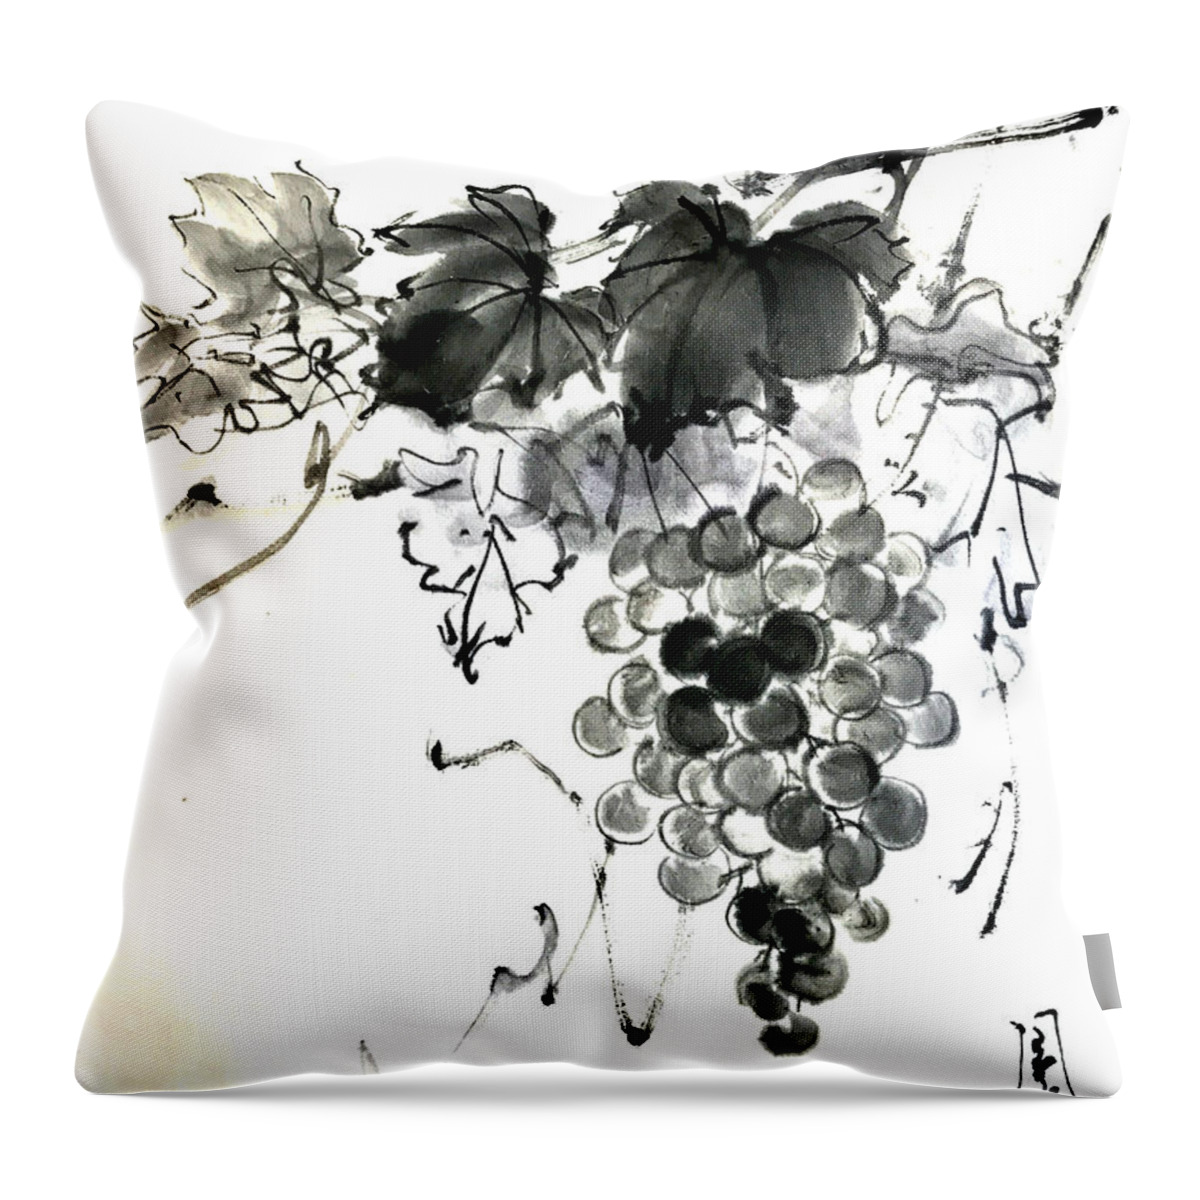 Japanese Throw Pillow featuring the painting Grapes by Fumiyo Yoshikawa